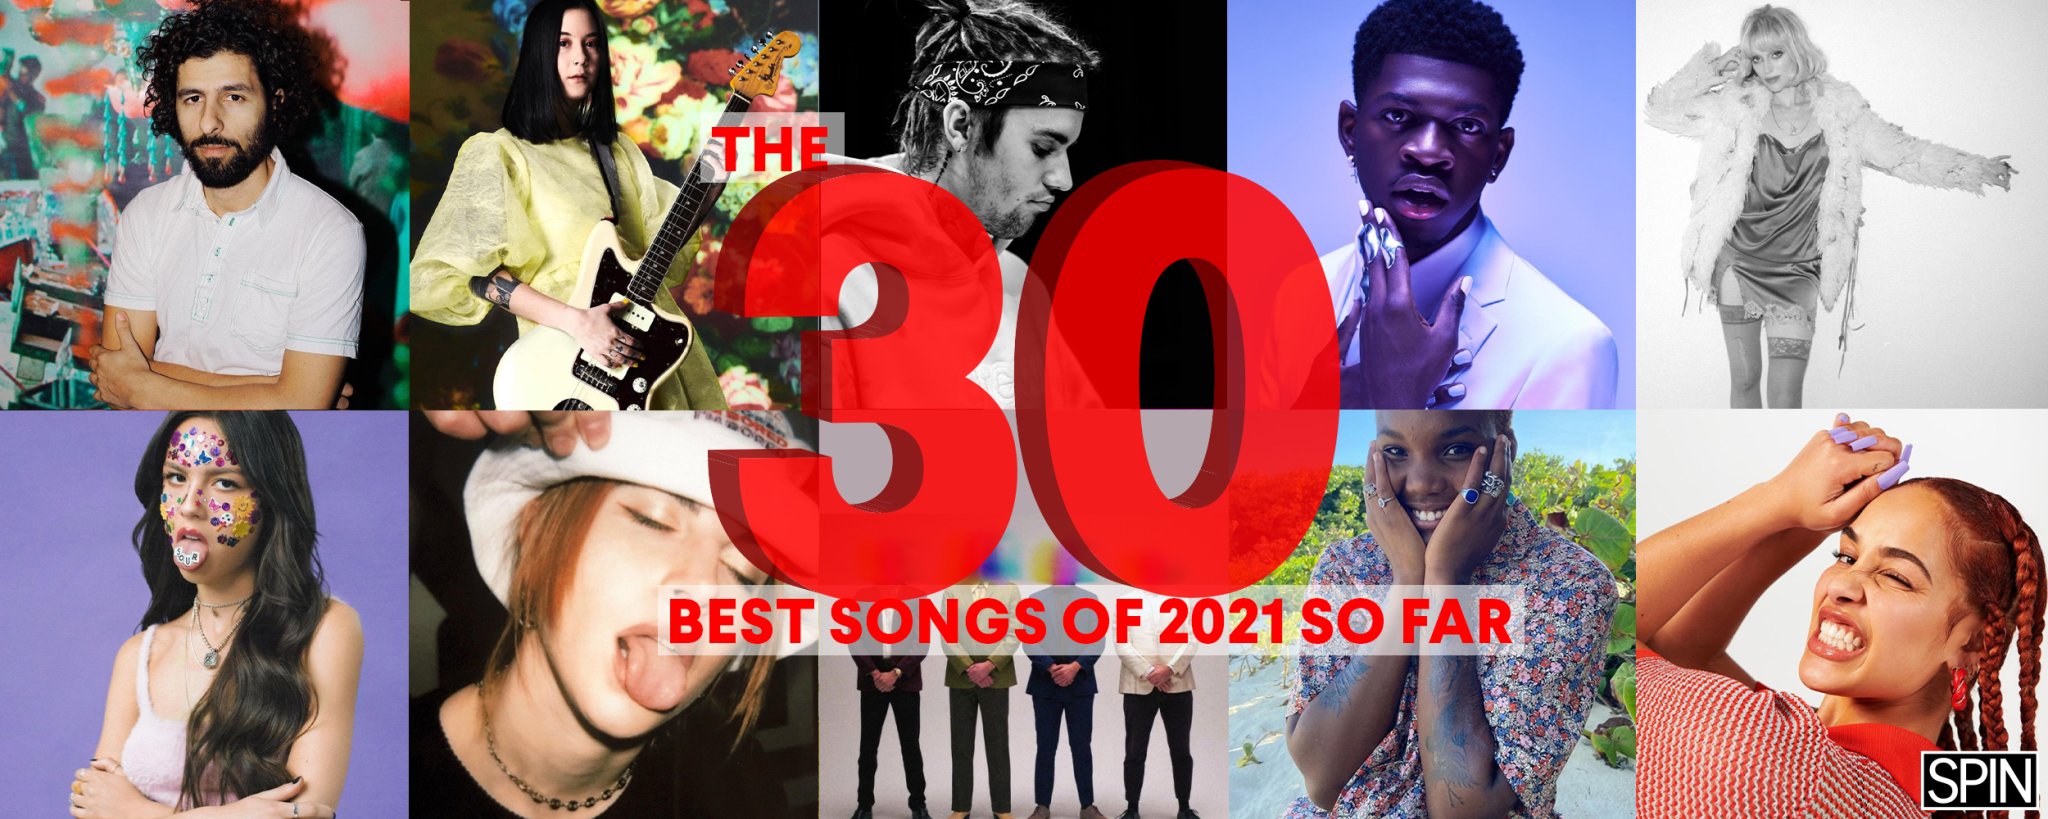 The 30 Best Songs of 2021 (So Far)